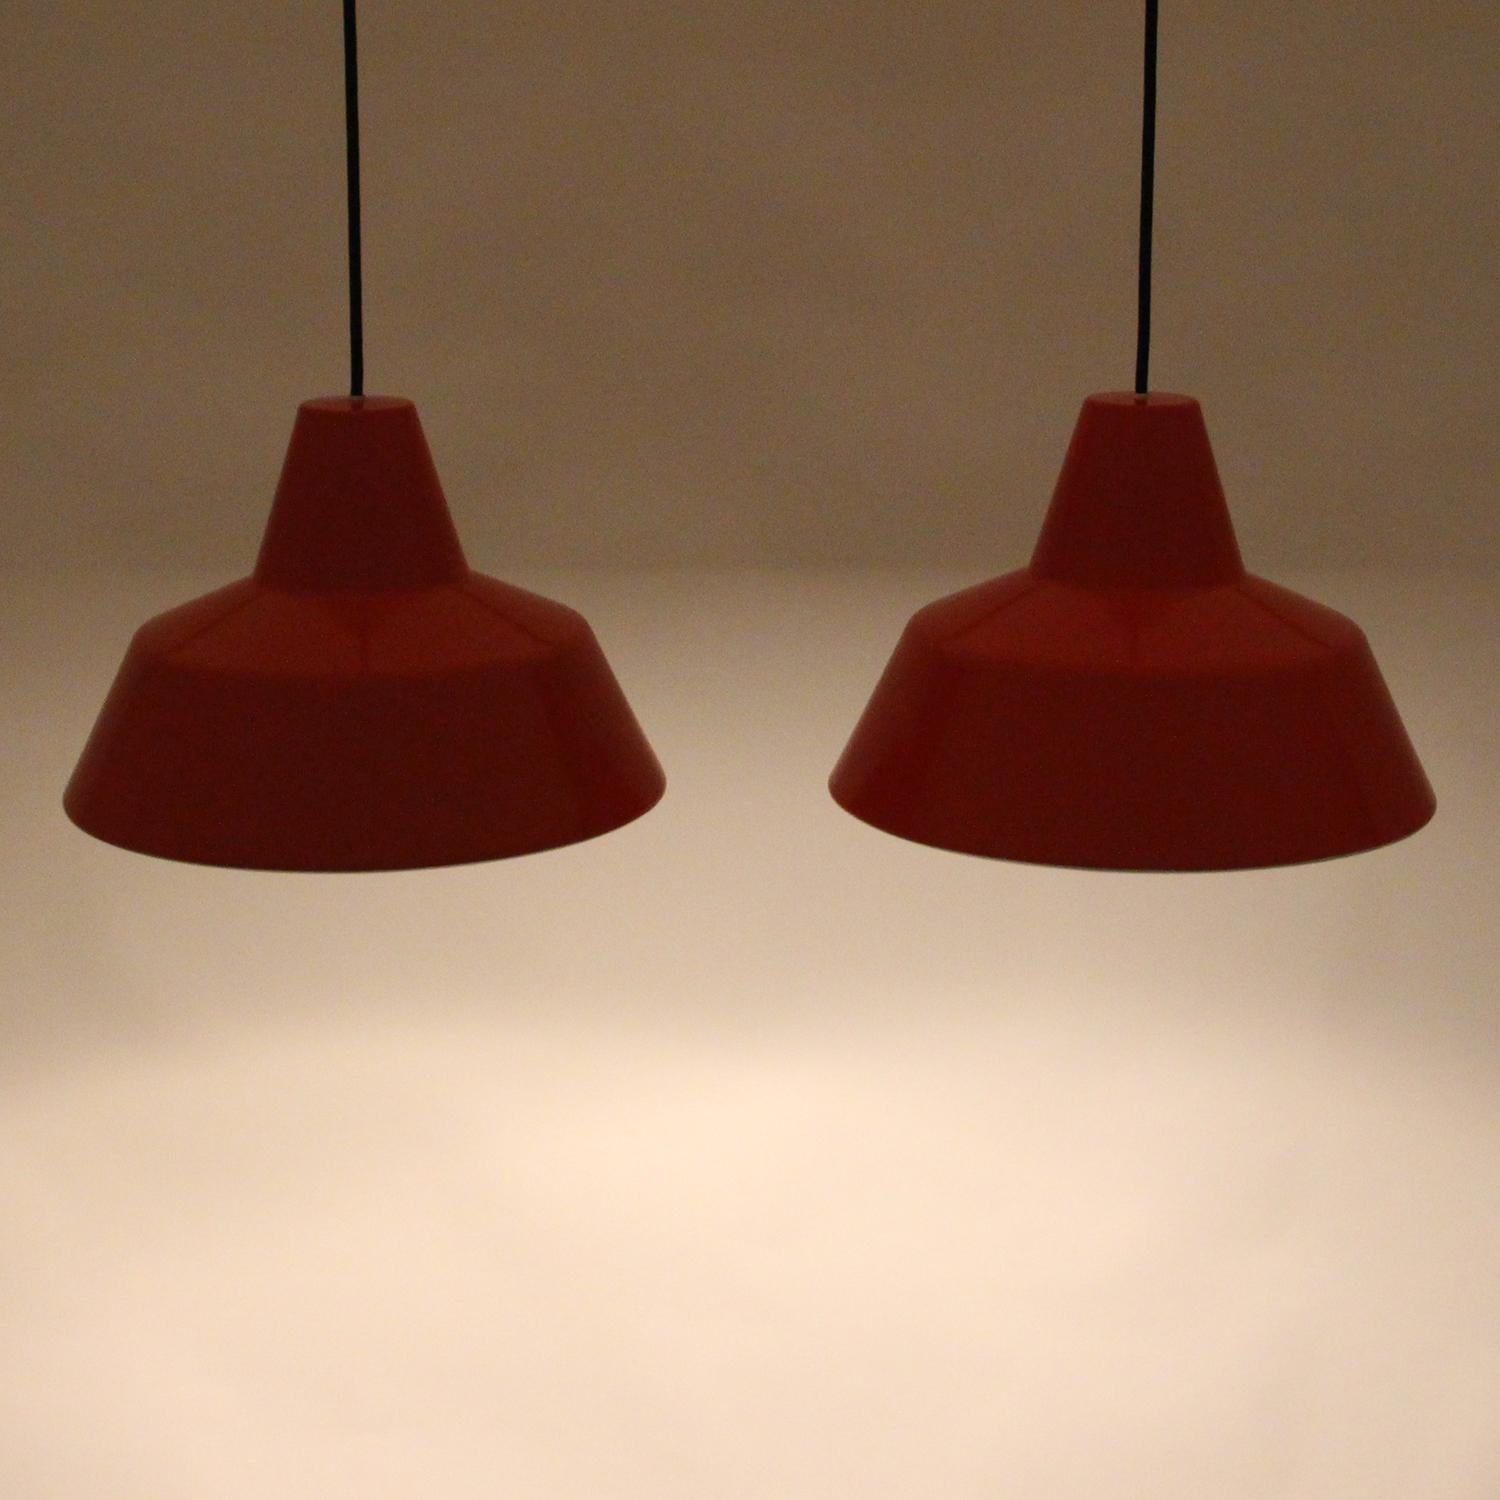 Mid-20th Century Enamel Pendants ‘Pair’ by Louis Poulsen 1960s Vintage Industrial Ceiling Lights